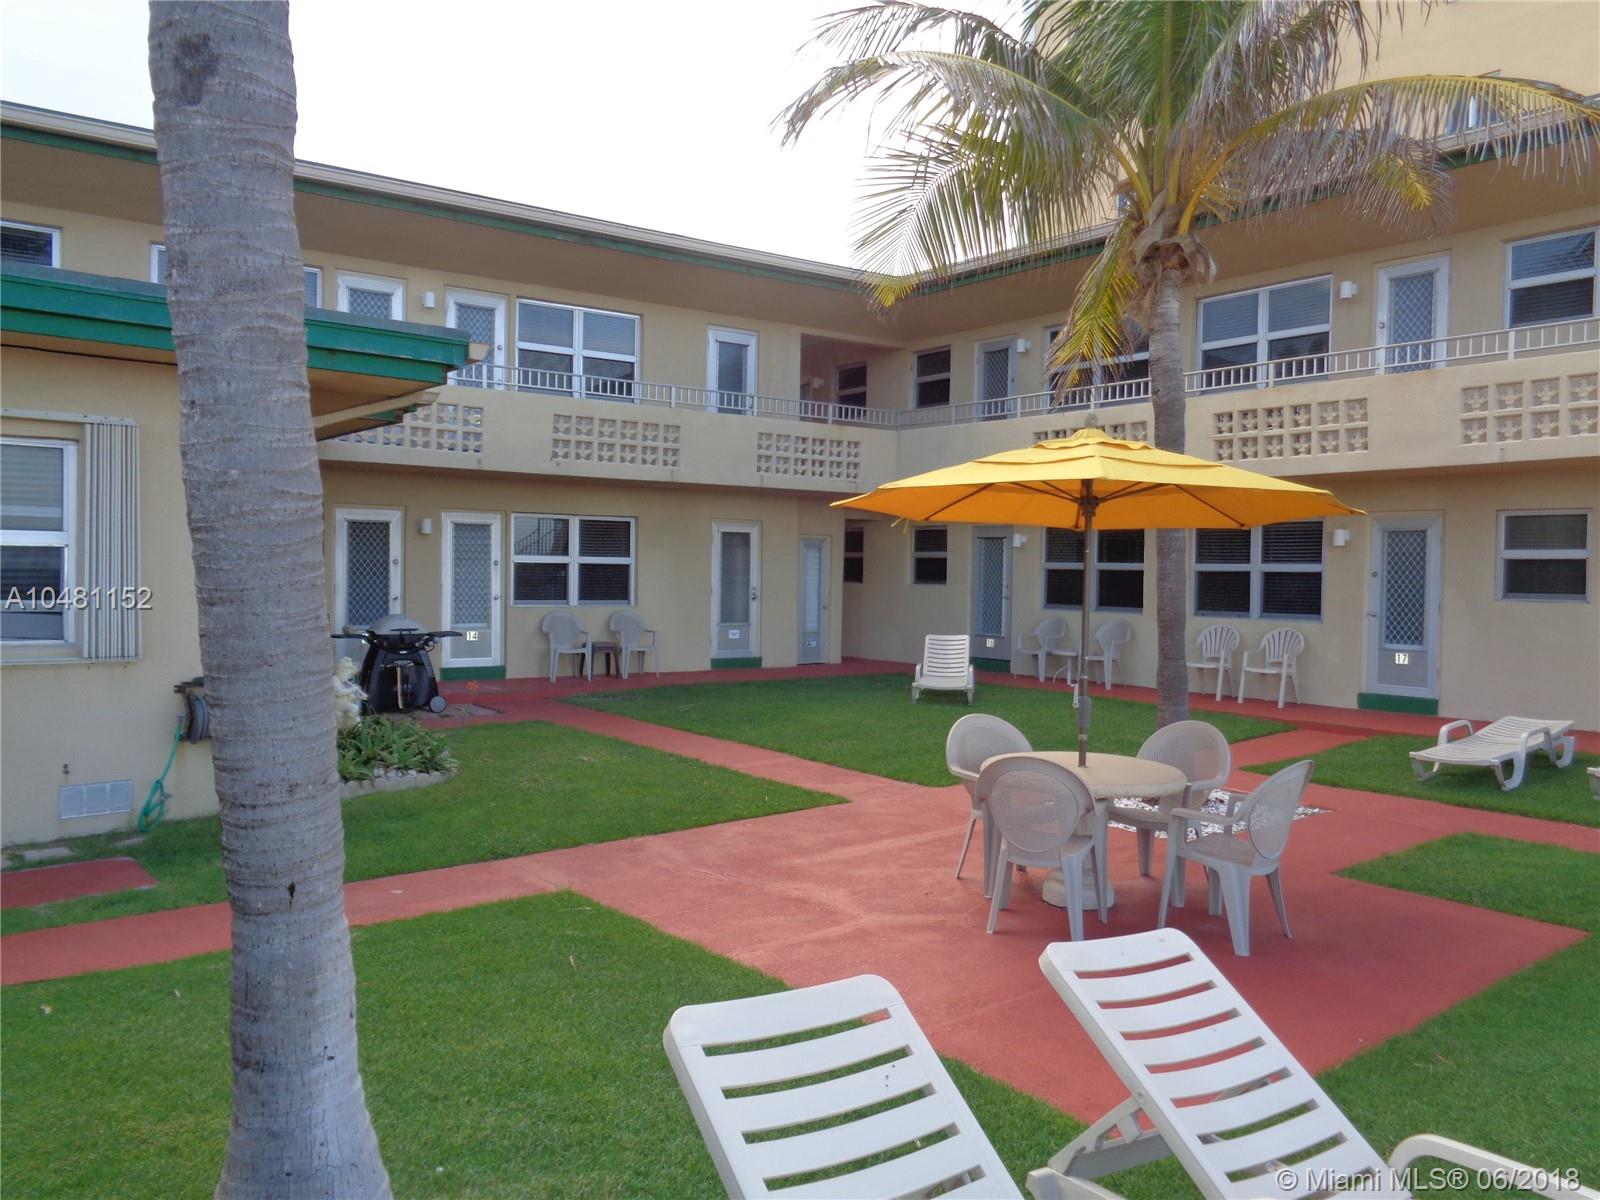 hotels in hollywood florida on the beach boardwalk